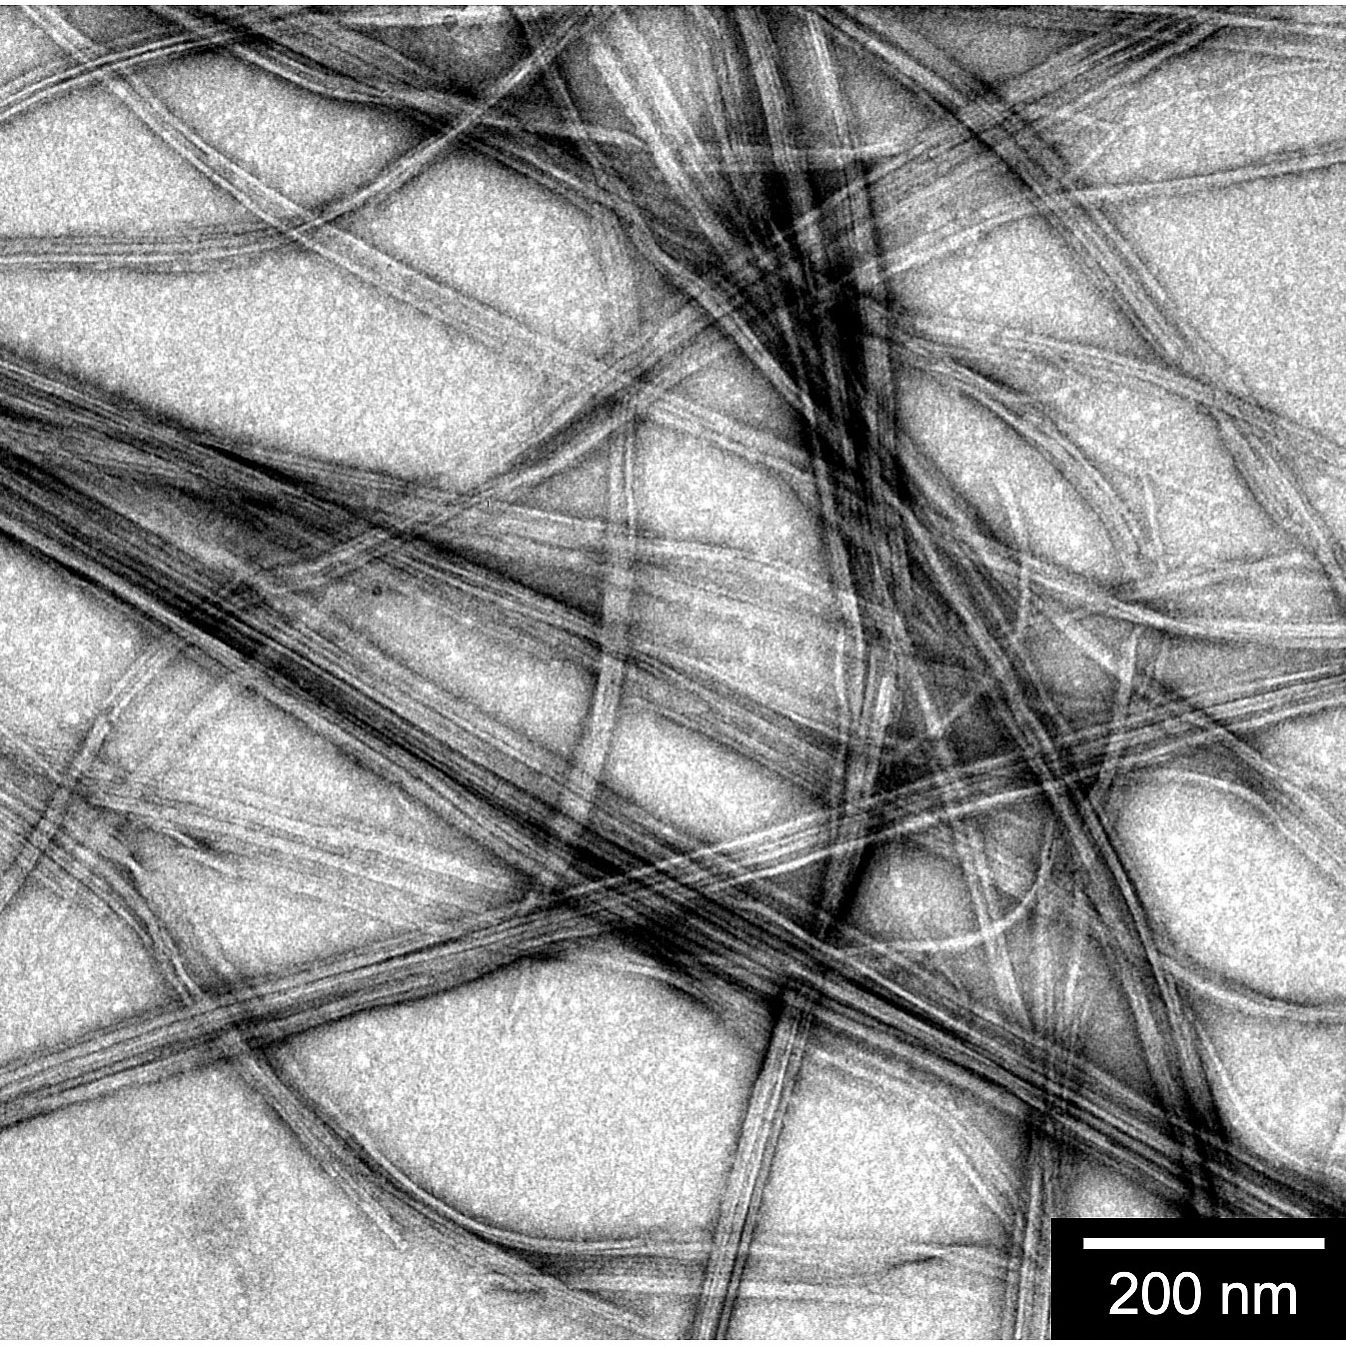 microscope image of nanofibers